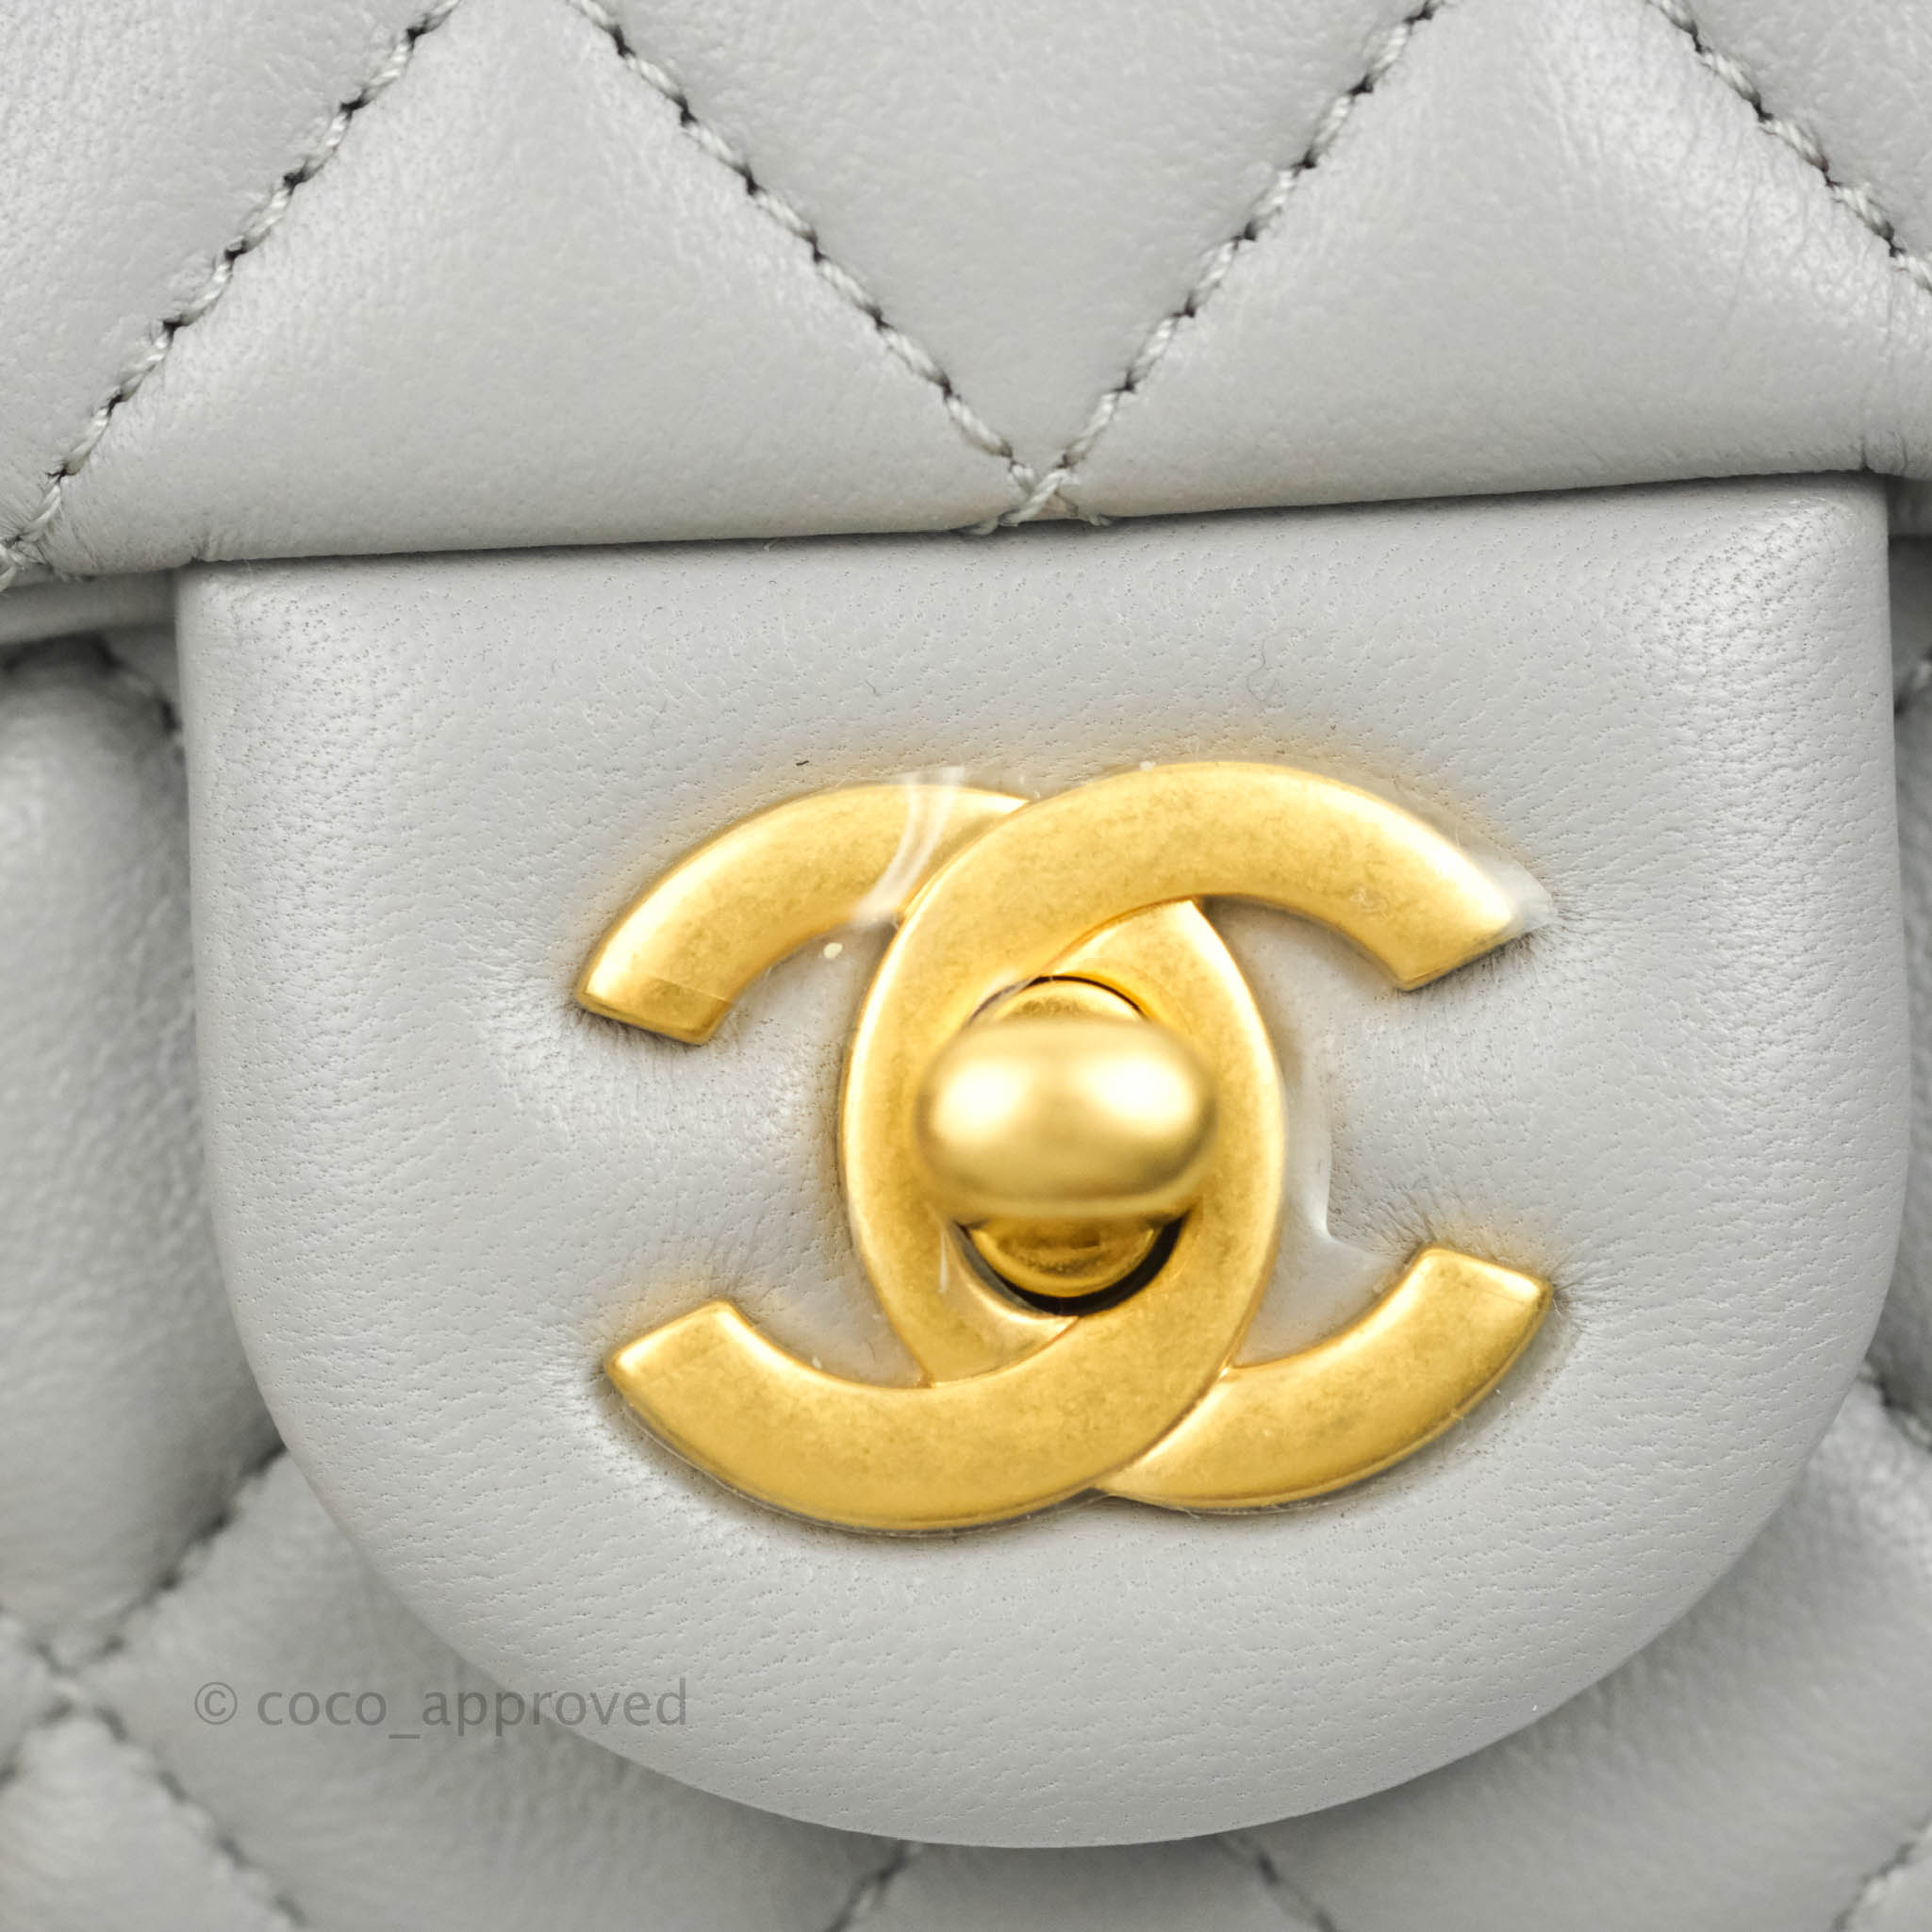 Chanel Multicolor Tweed Pearl Crush Square Flap Mini Q6B51T4FM9000